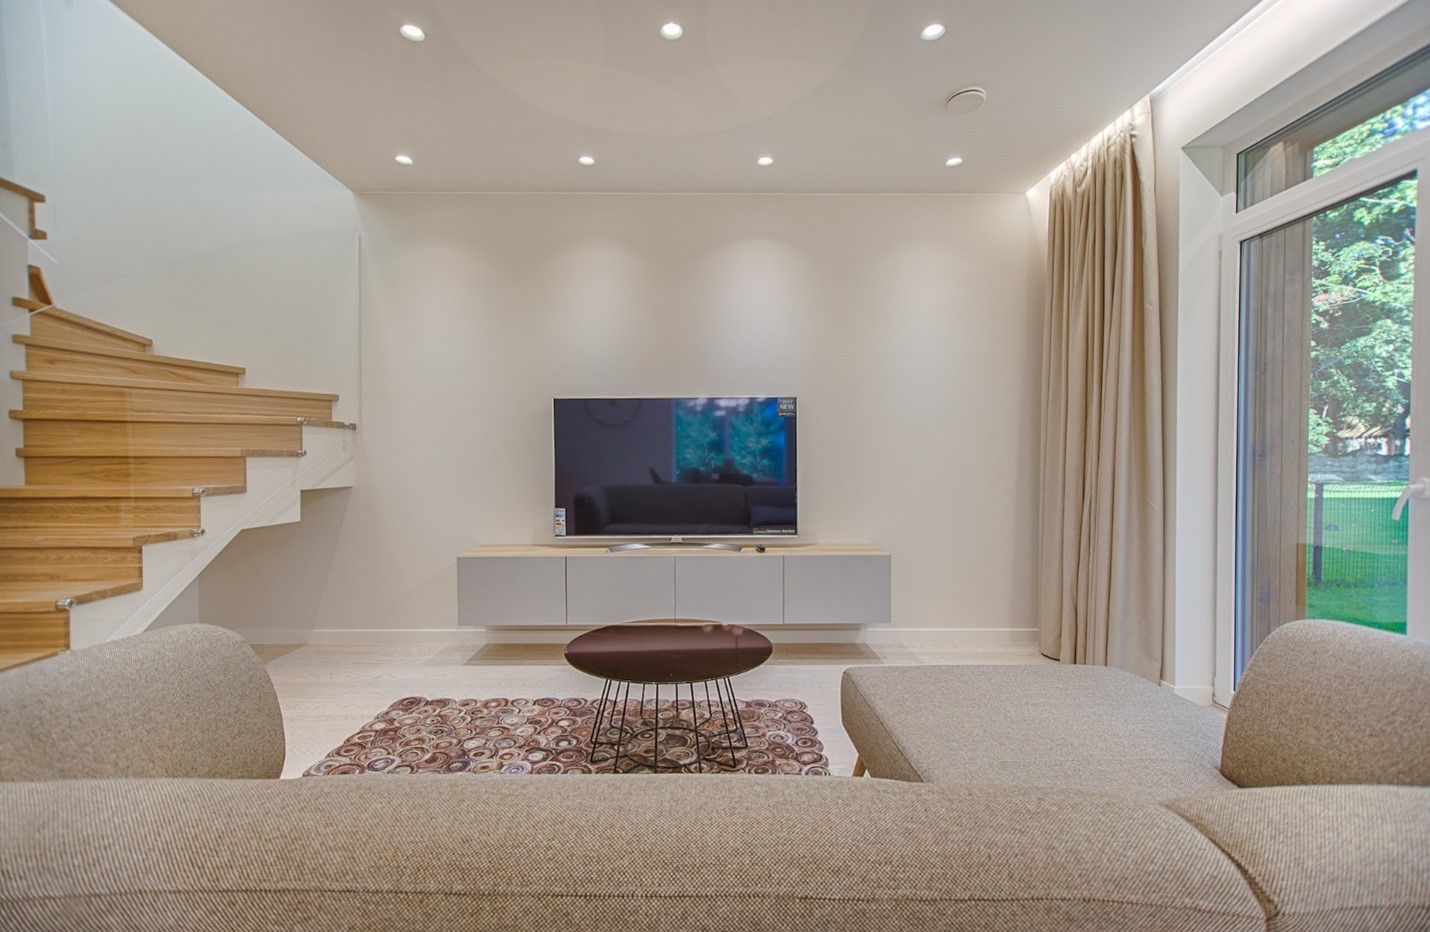 Modern Interior of a Home